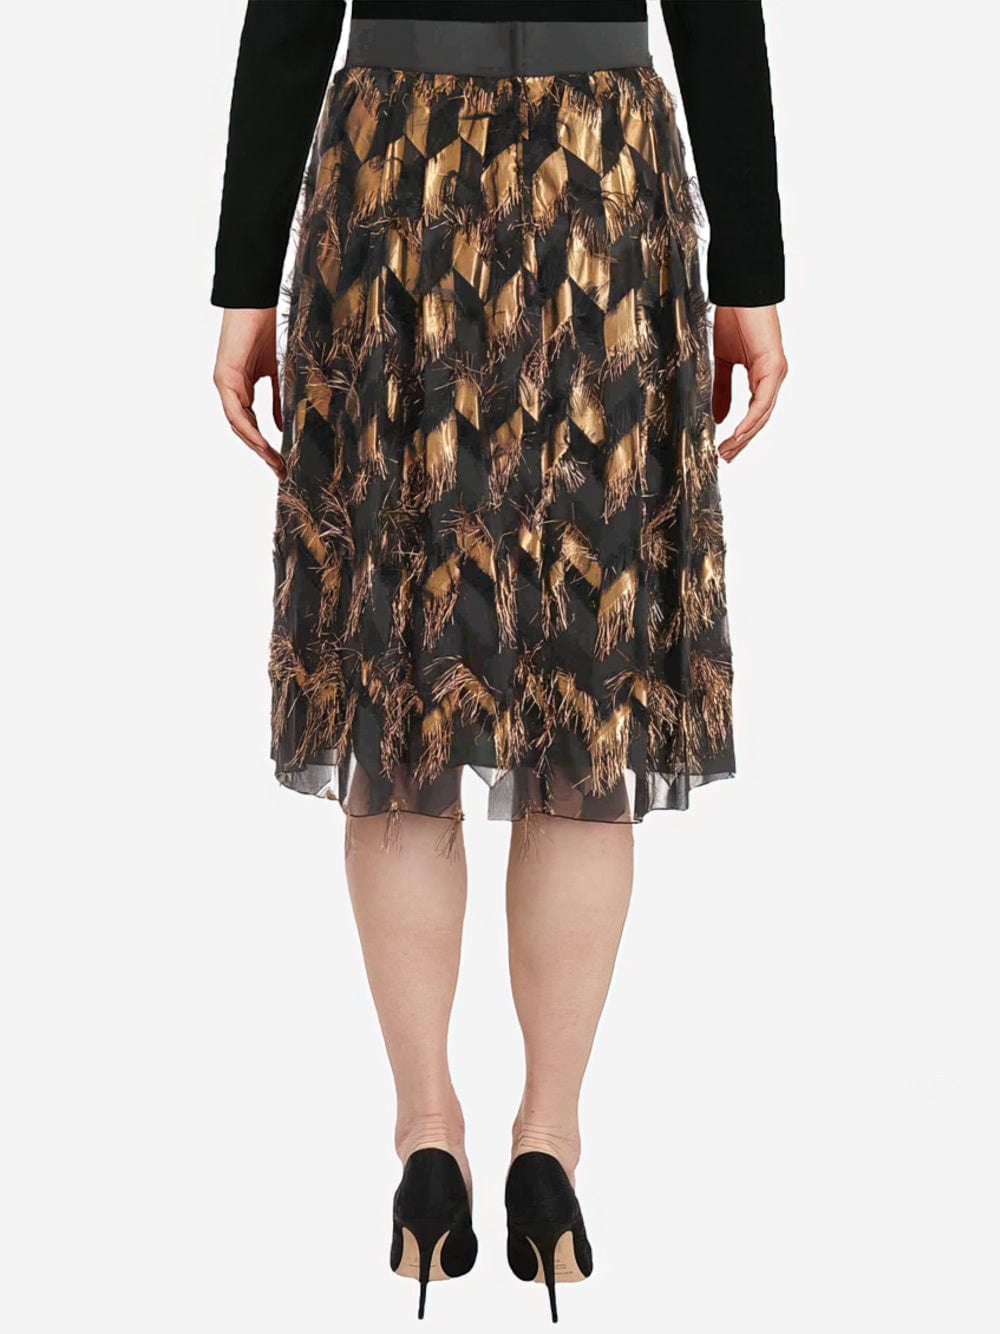 Dolce & Gabbana Metallic Pencil Skirt